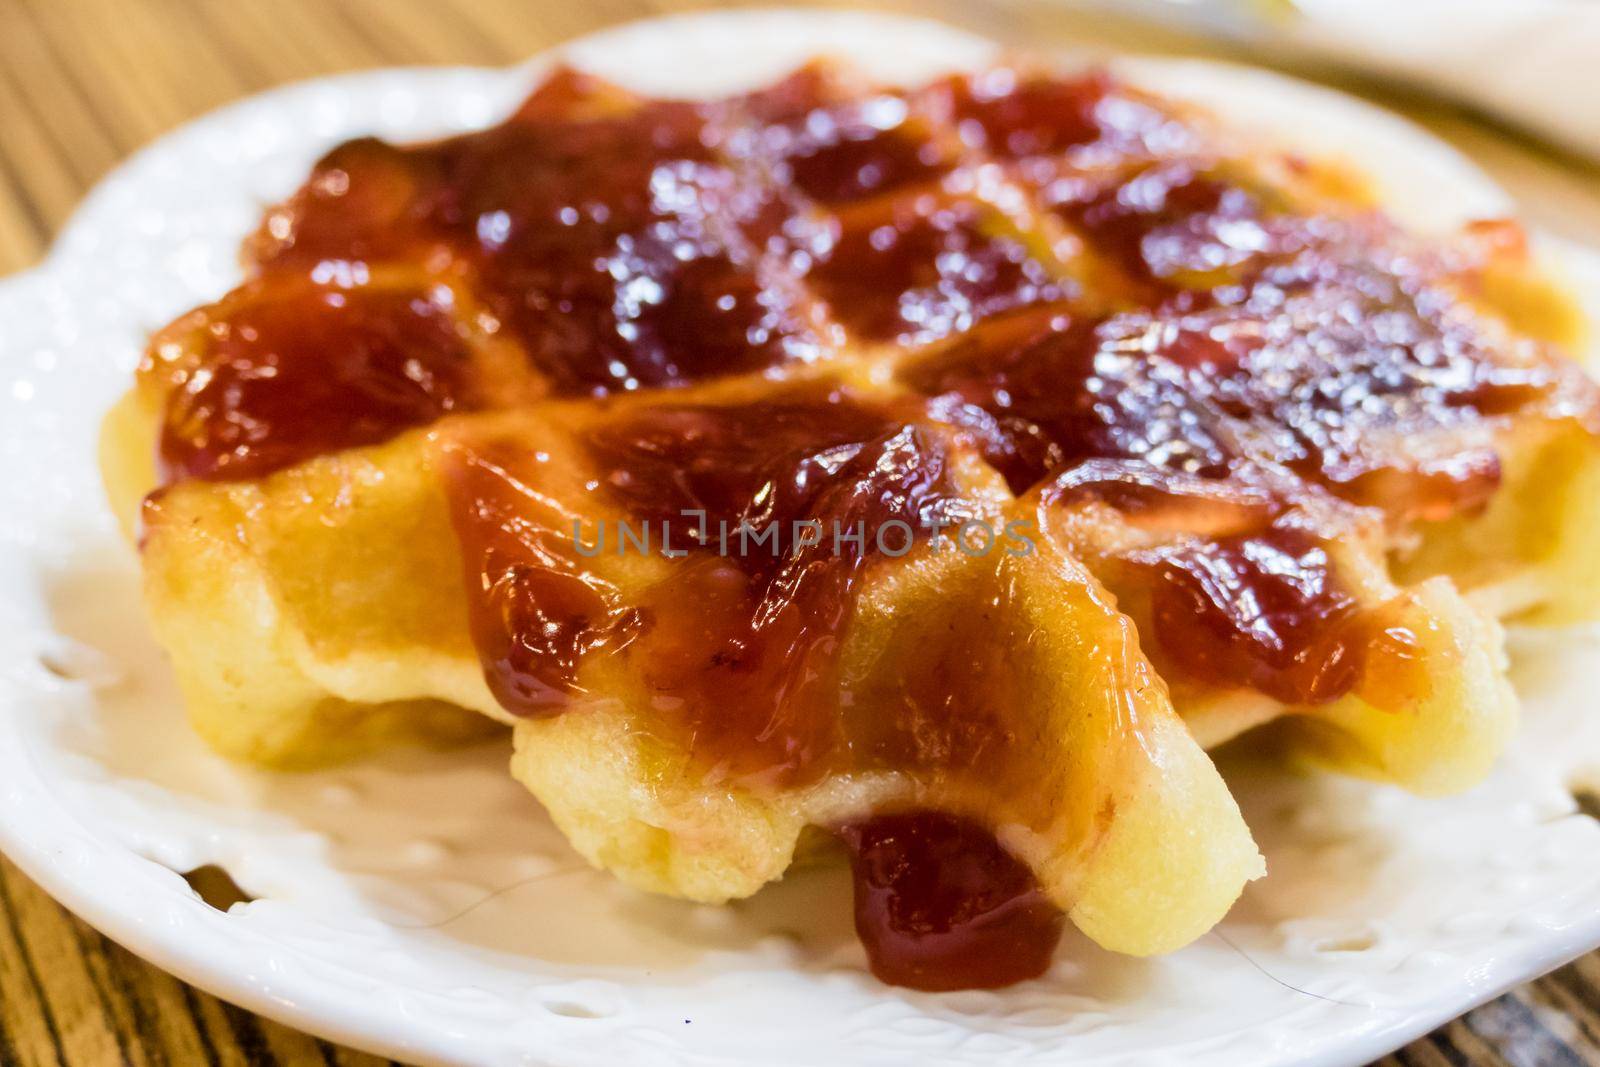 Fresh Belgian liege waffle with strawberry jam by imagesbykenny